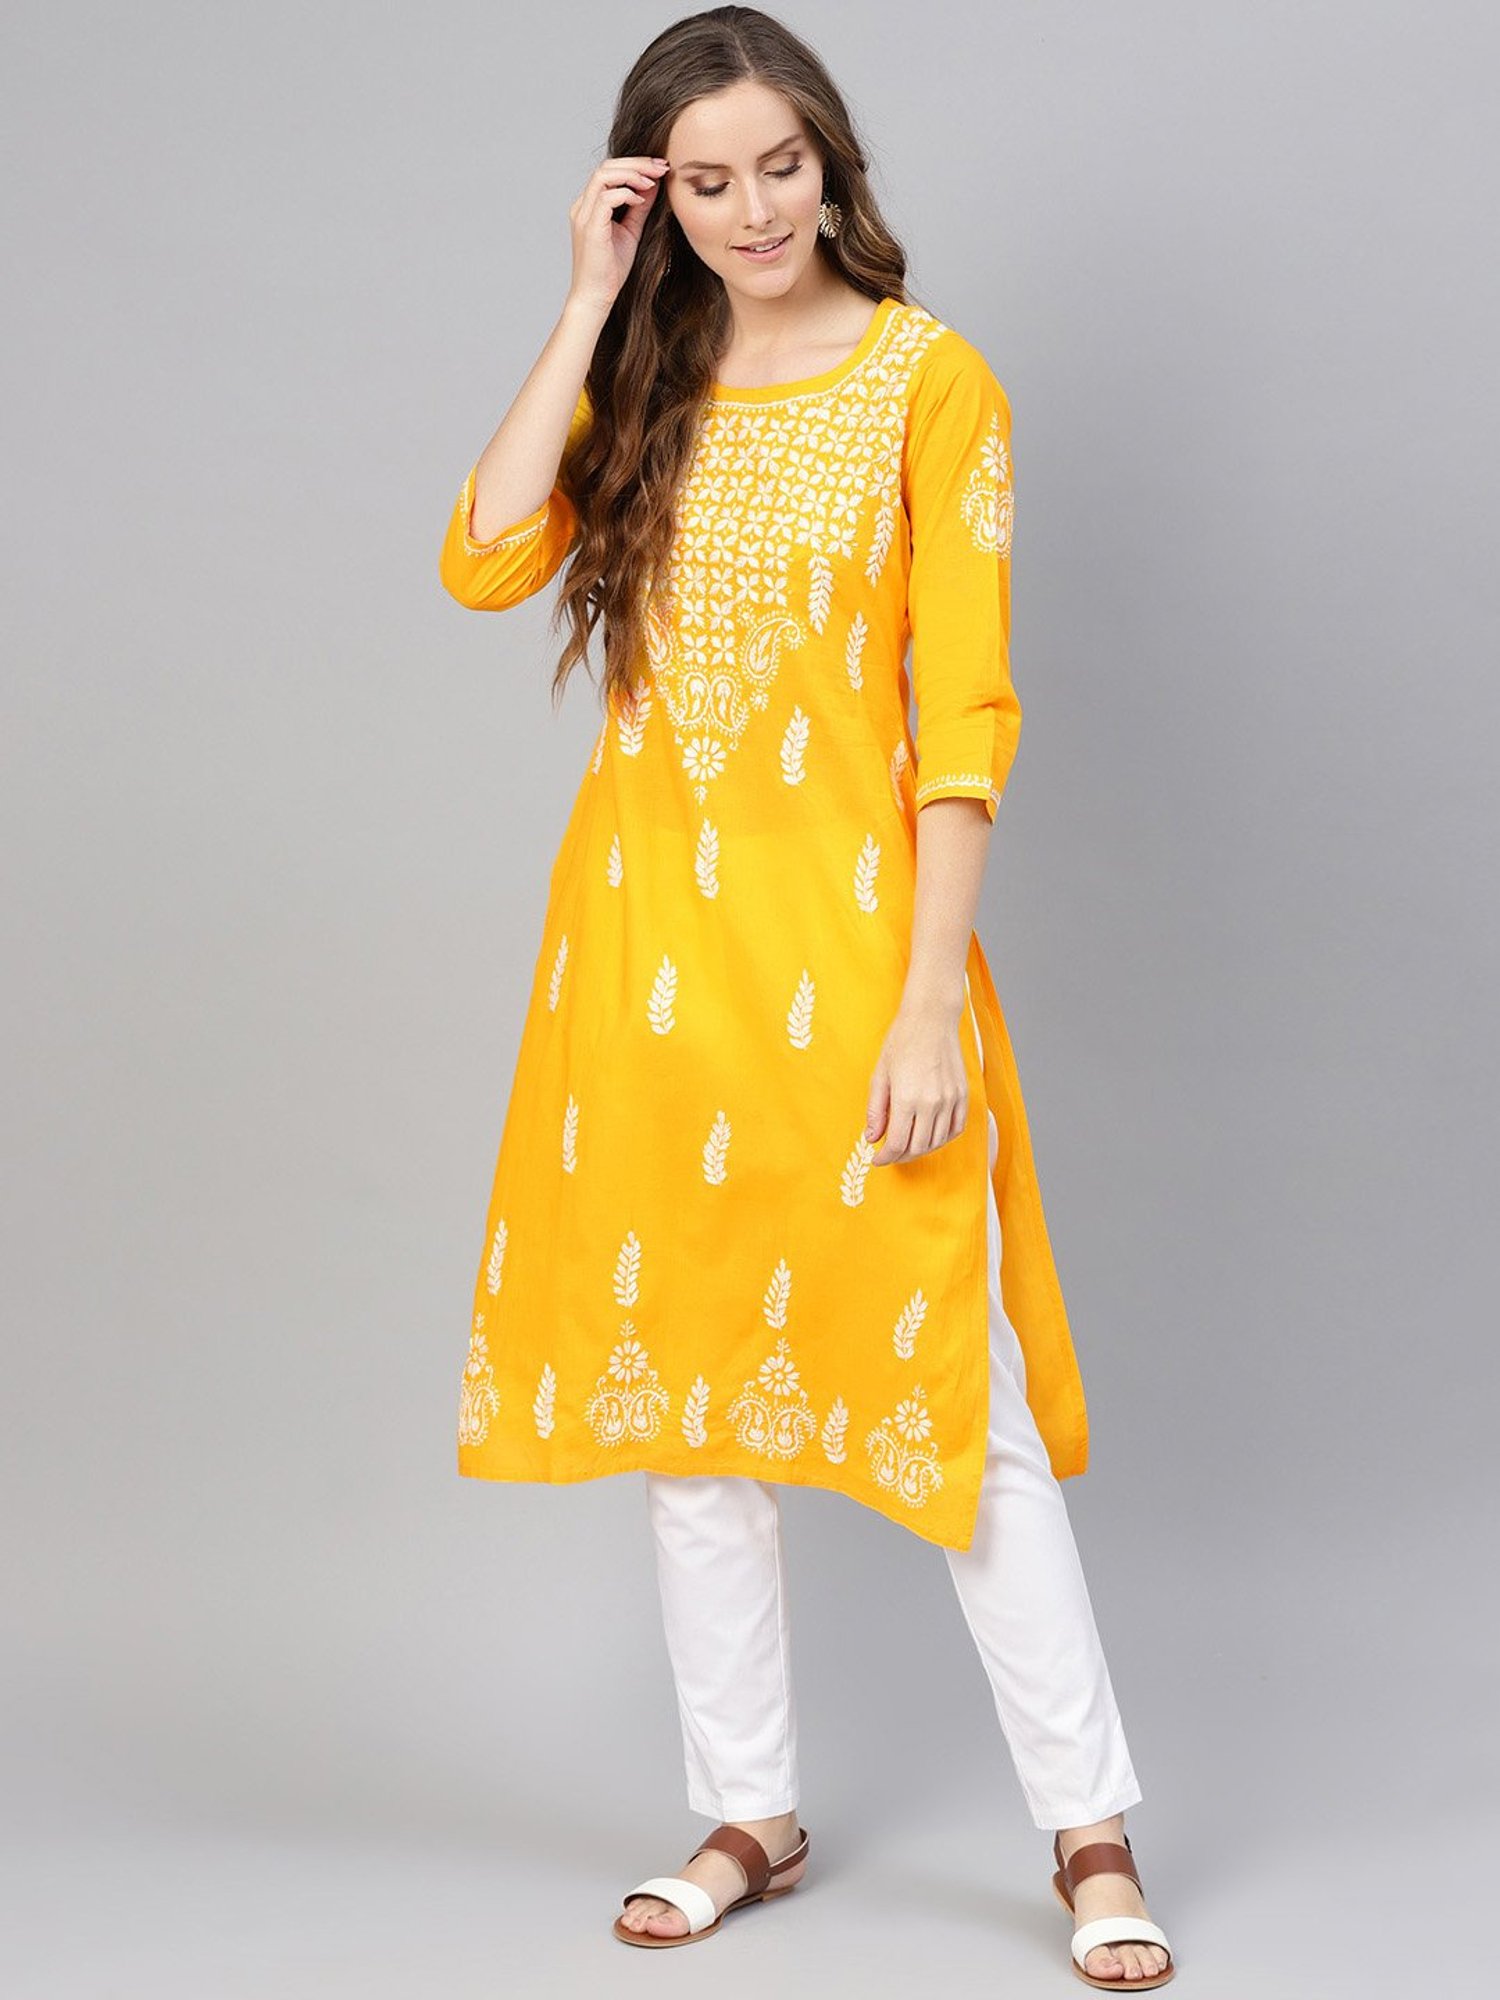 Rangmanch by Pantaloons Yellow Cotton Printed A Line Kurta